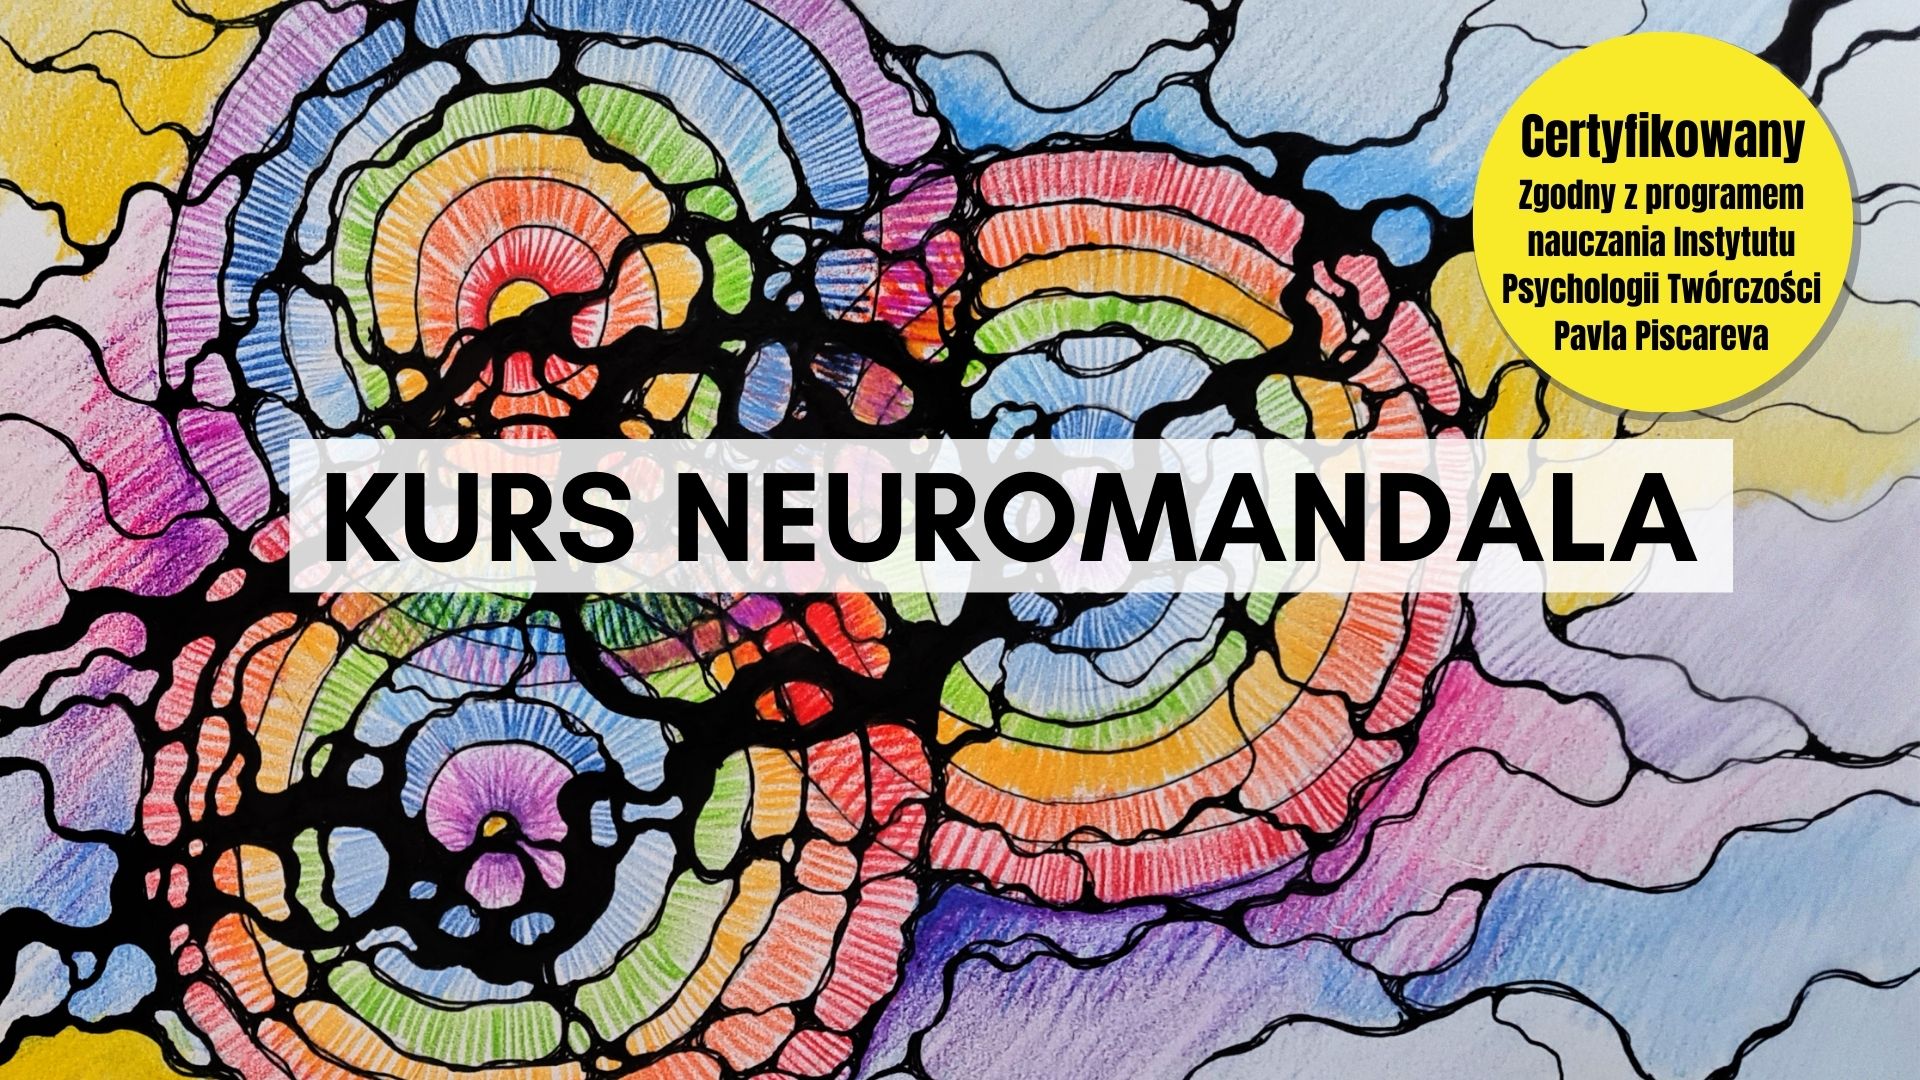 Neuromandala - kurs certyfikowany